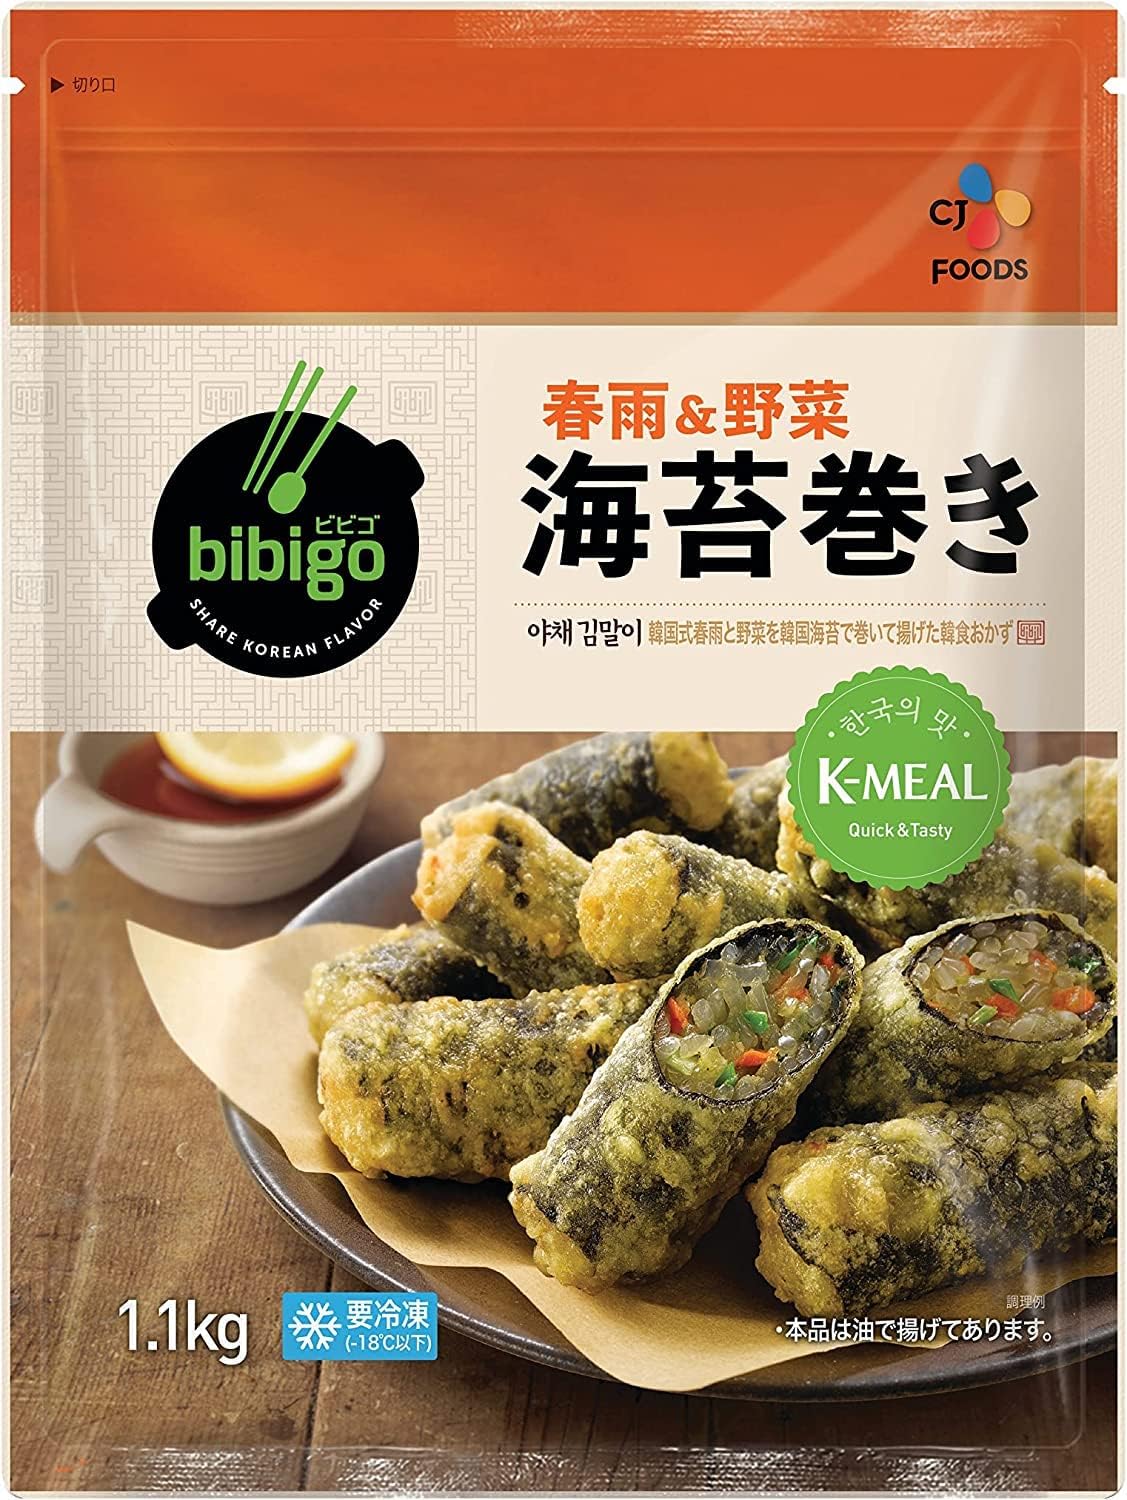 bibi go 春雨＆野菜 海苔巻き 400g 韓国料理 食品 韓国食品 人気 惣菜 冷食